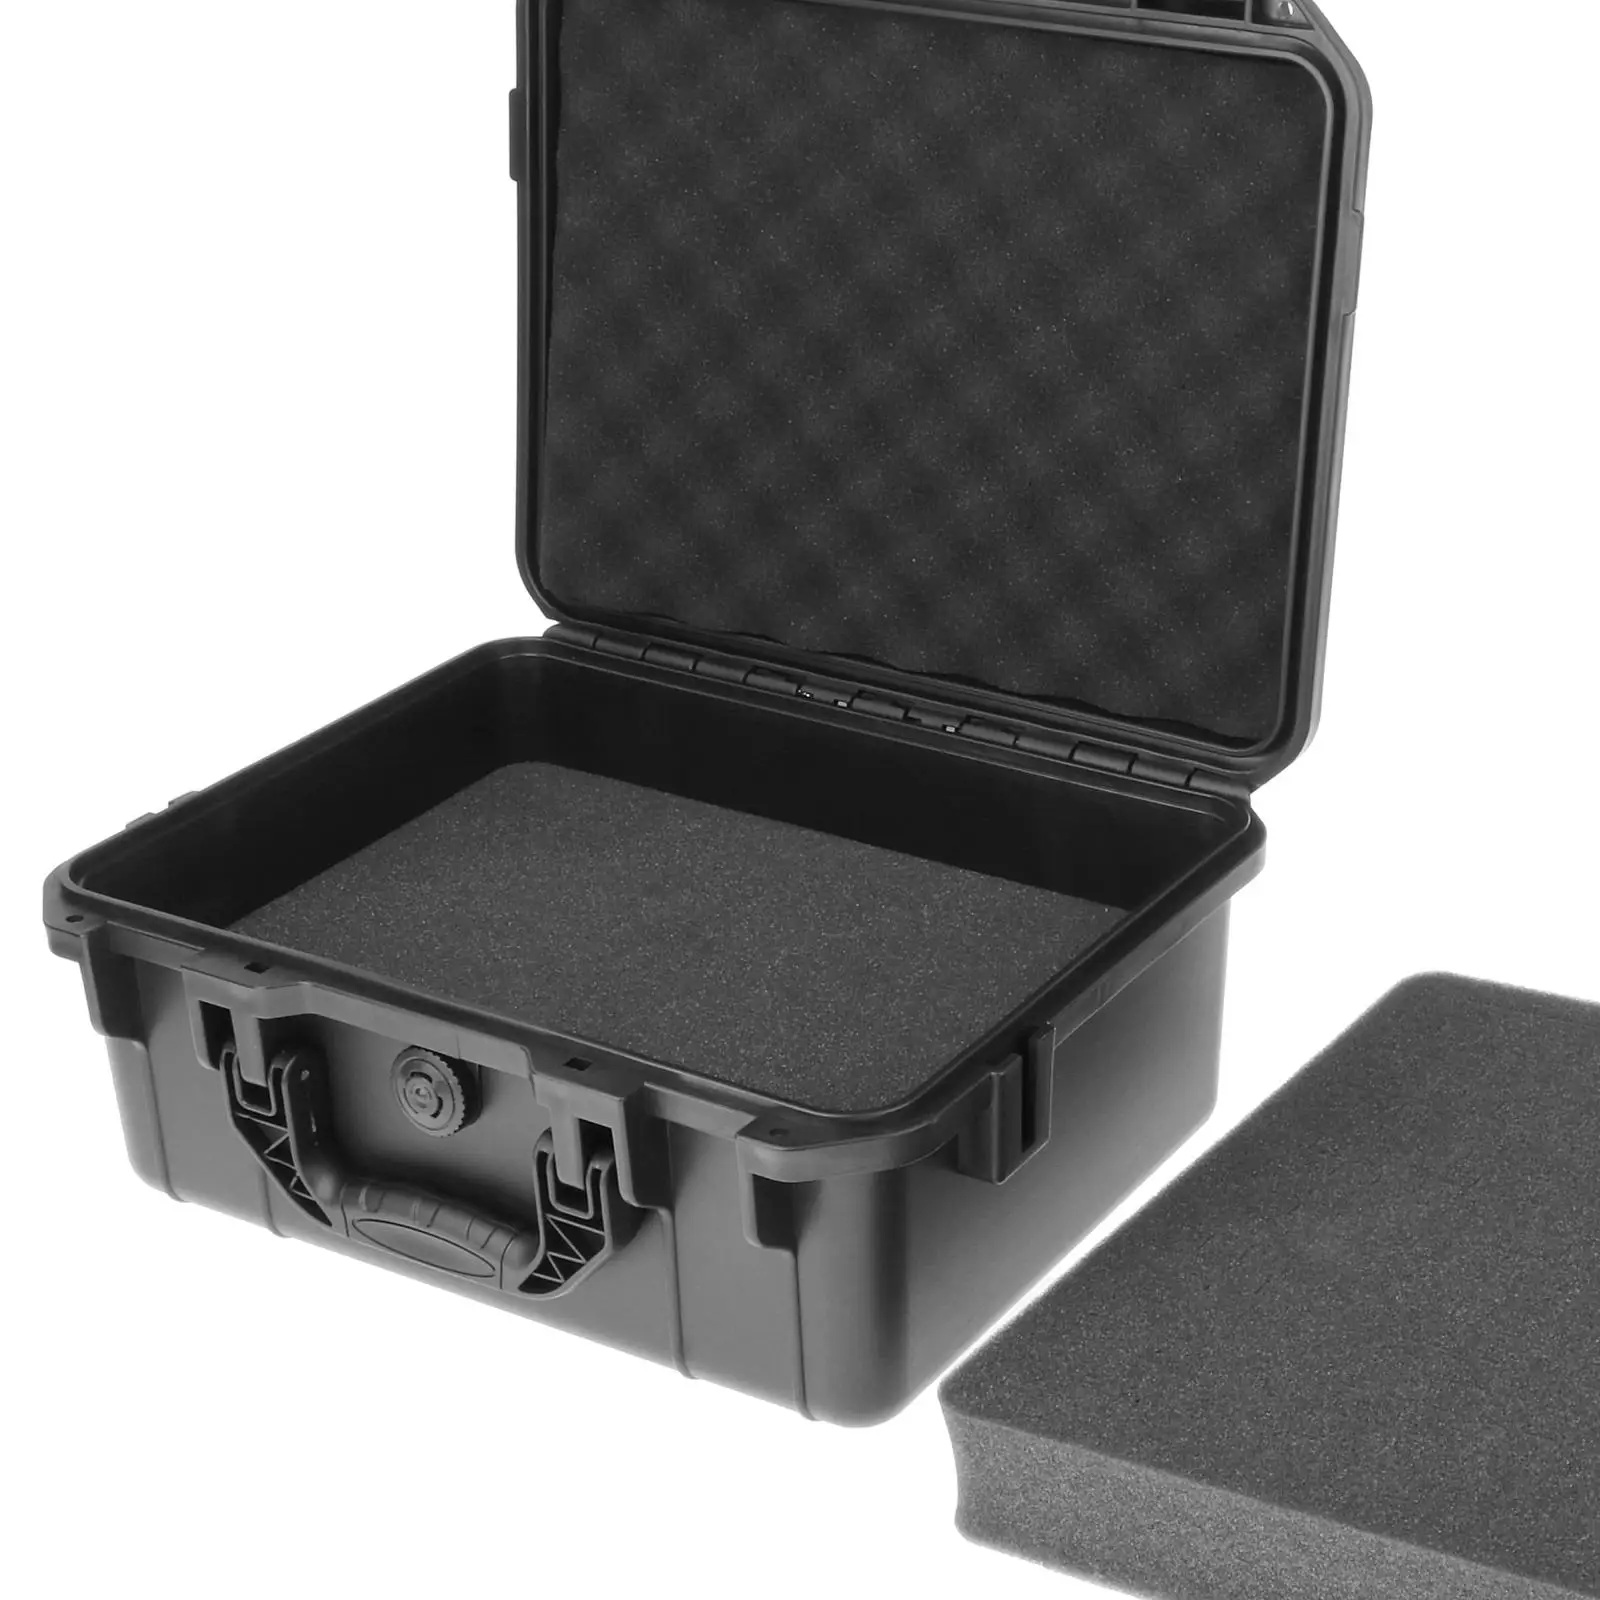 Waterproof Hard Carry Case Tool Storage Box Portable Organizer w/Sponge